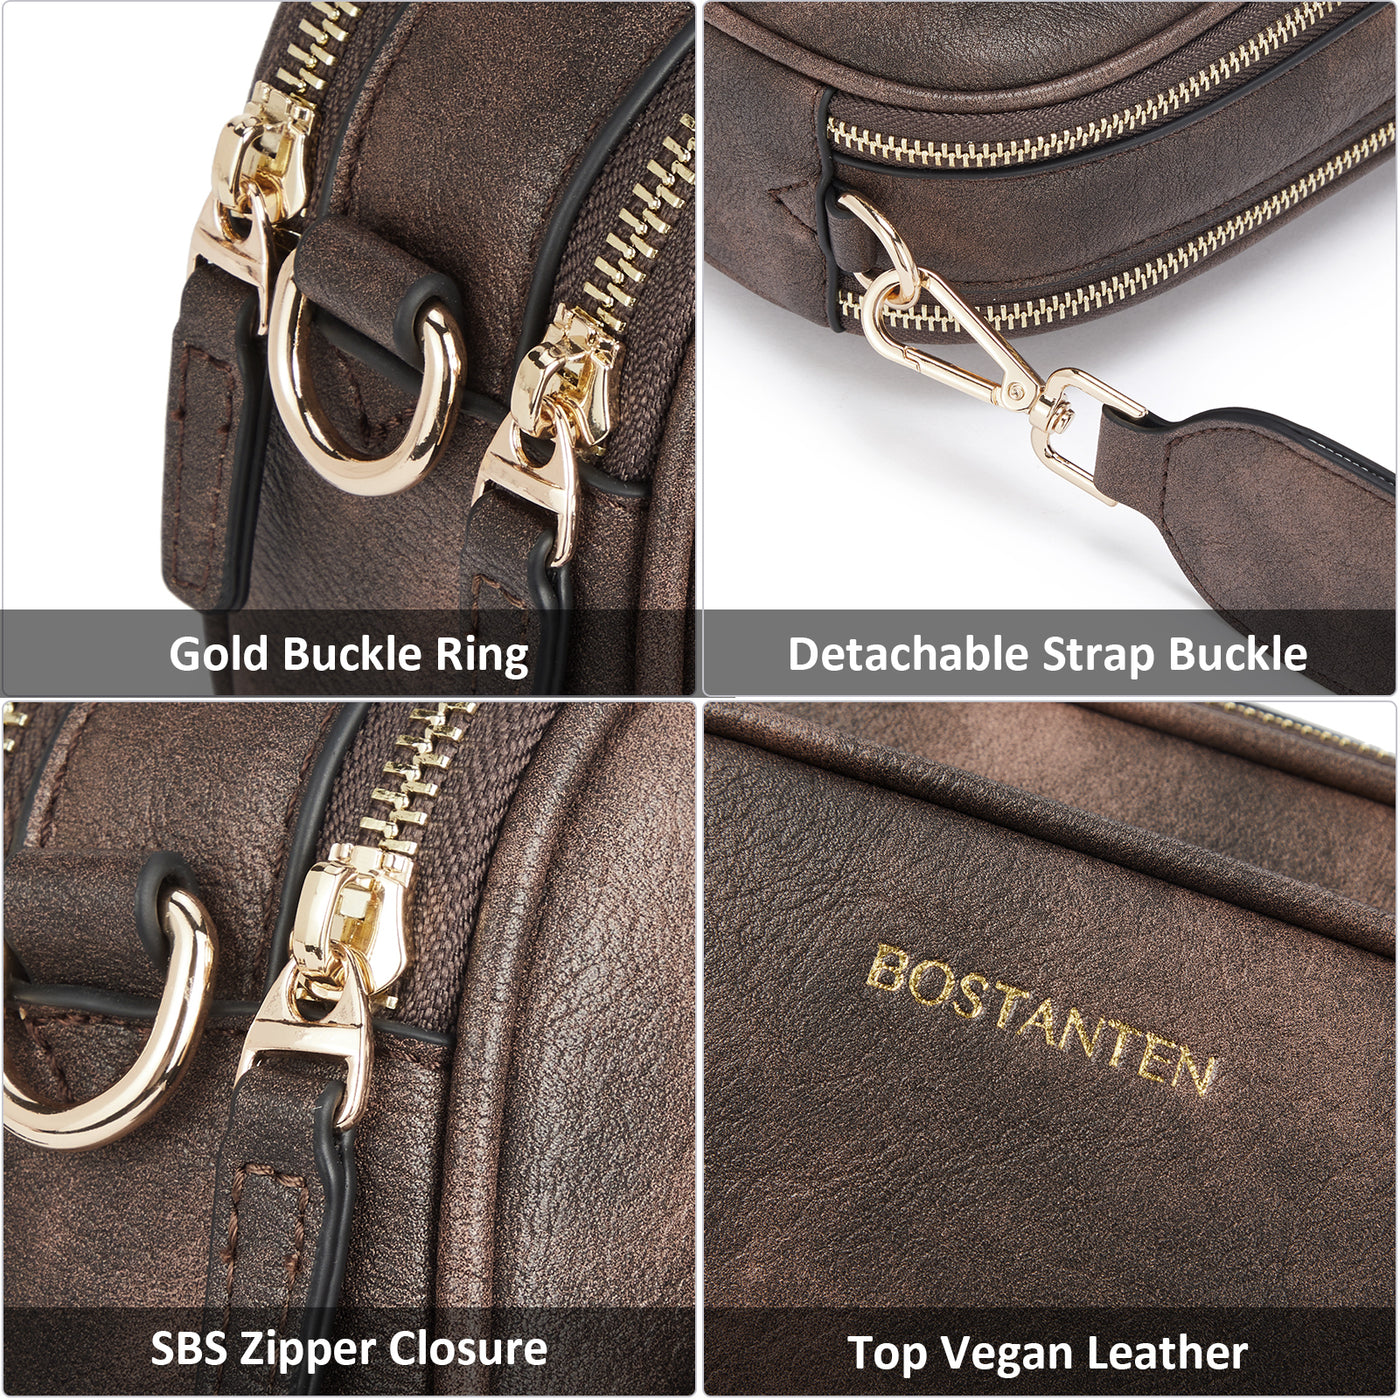  BOSTANTEN Crossbody Bags for Women Leather Snapshot